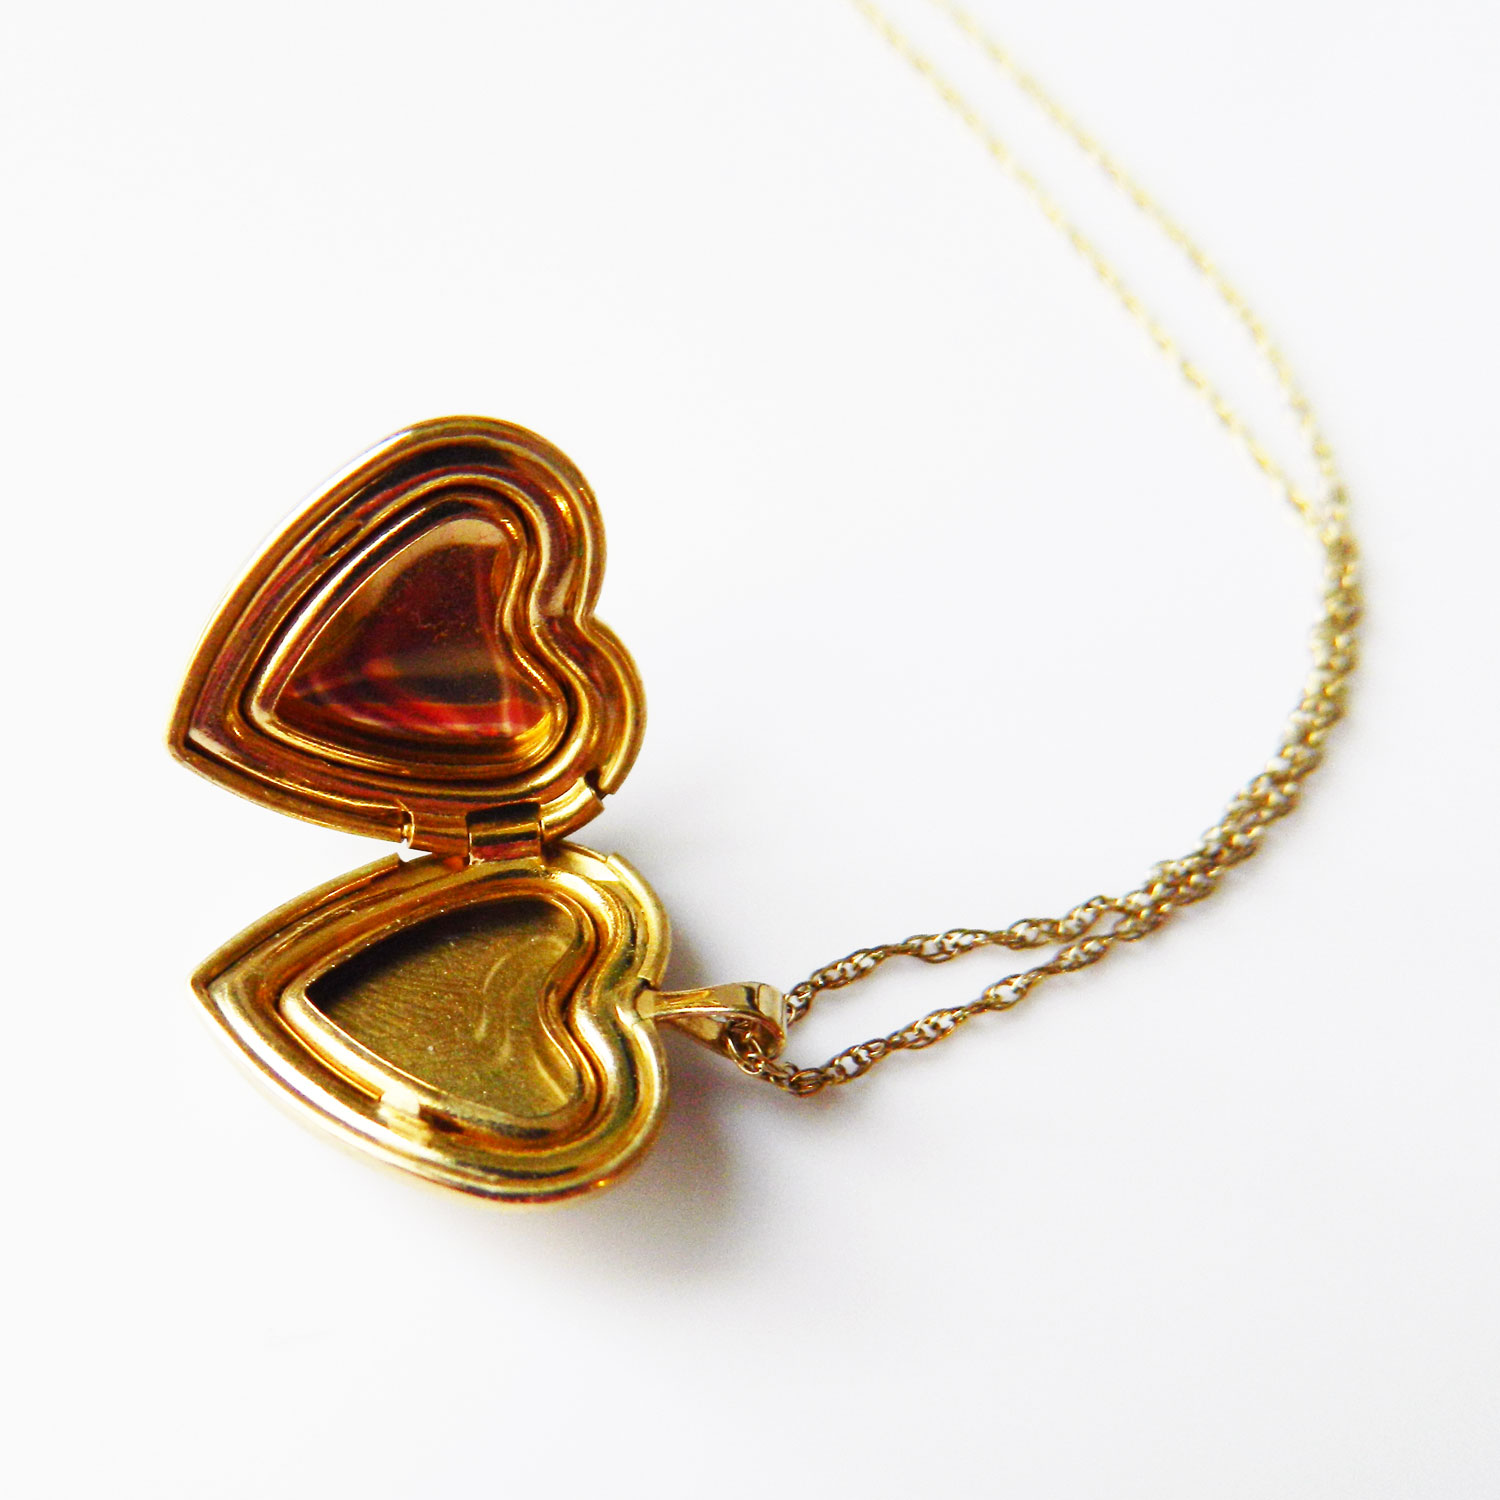 Vintage heart locket necklace by Park Lane